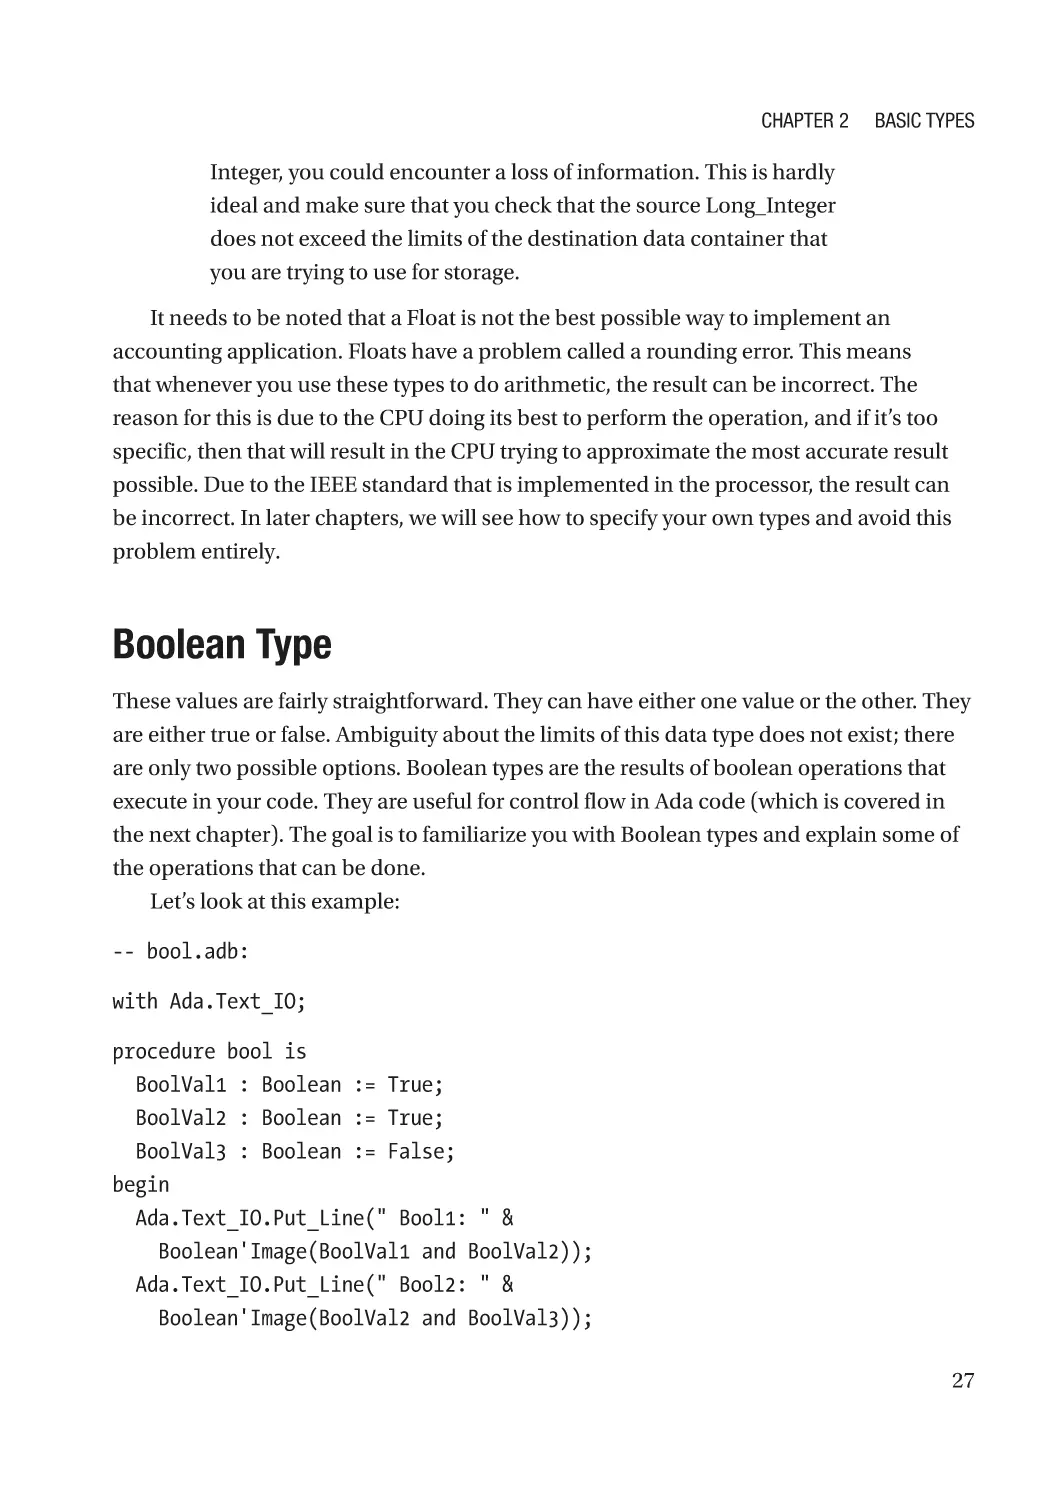 Boolean Type